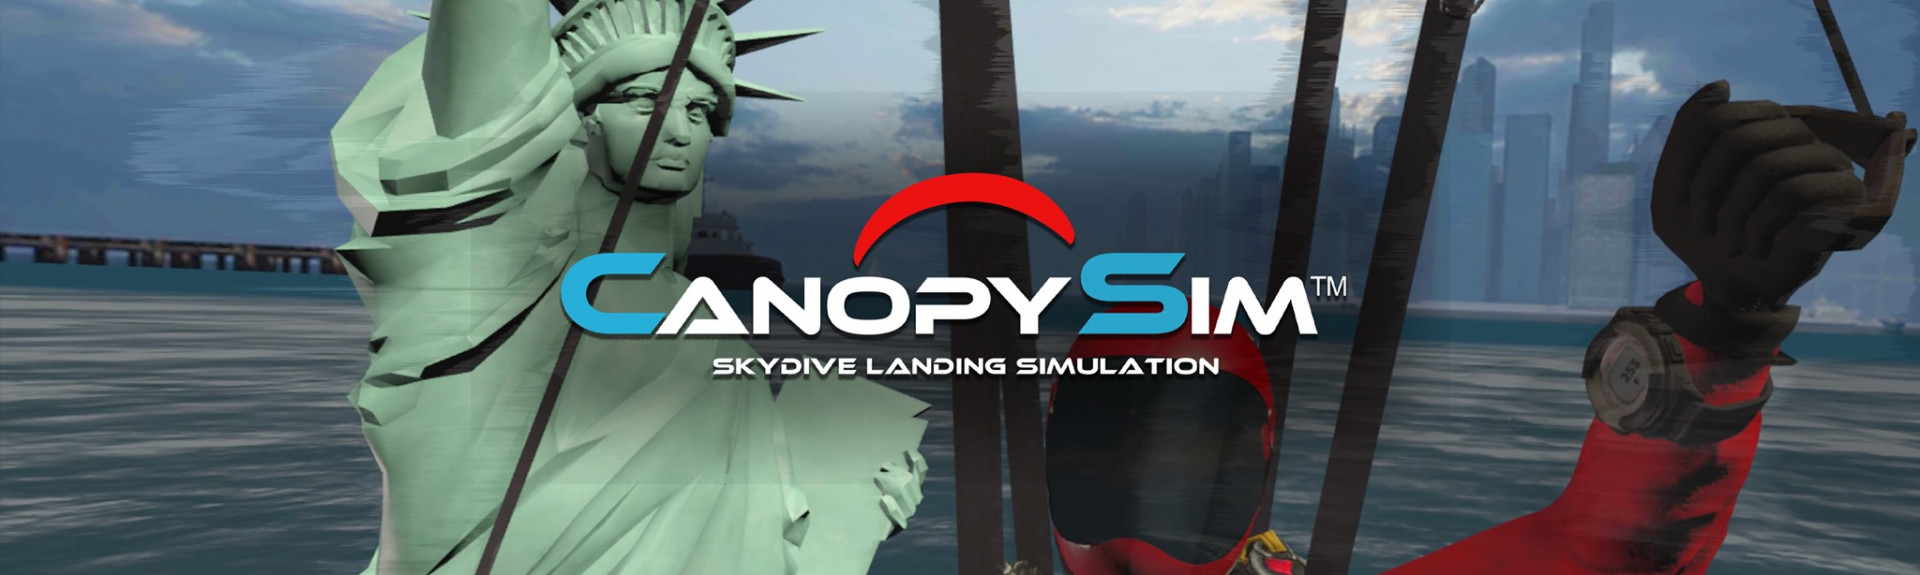 CanopySim-Skydive Landing Simulation